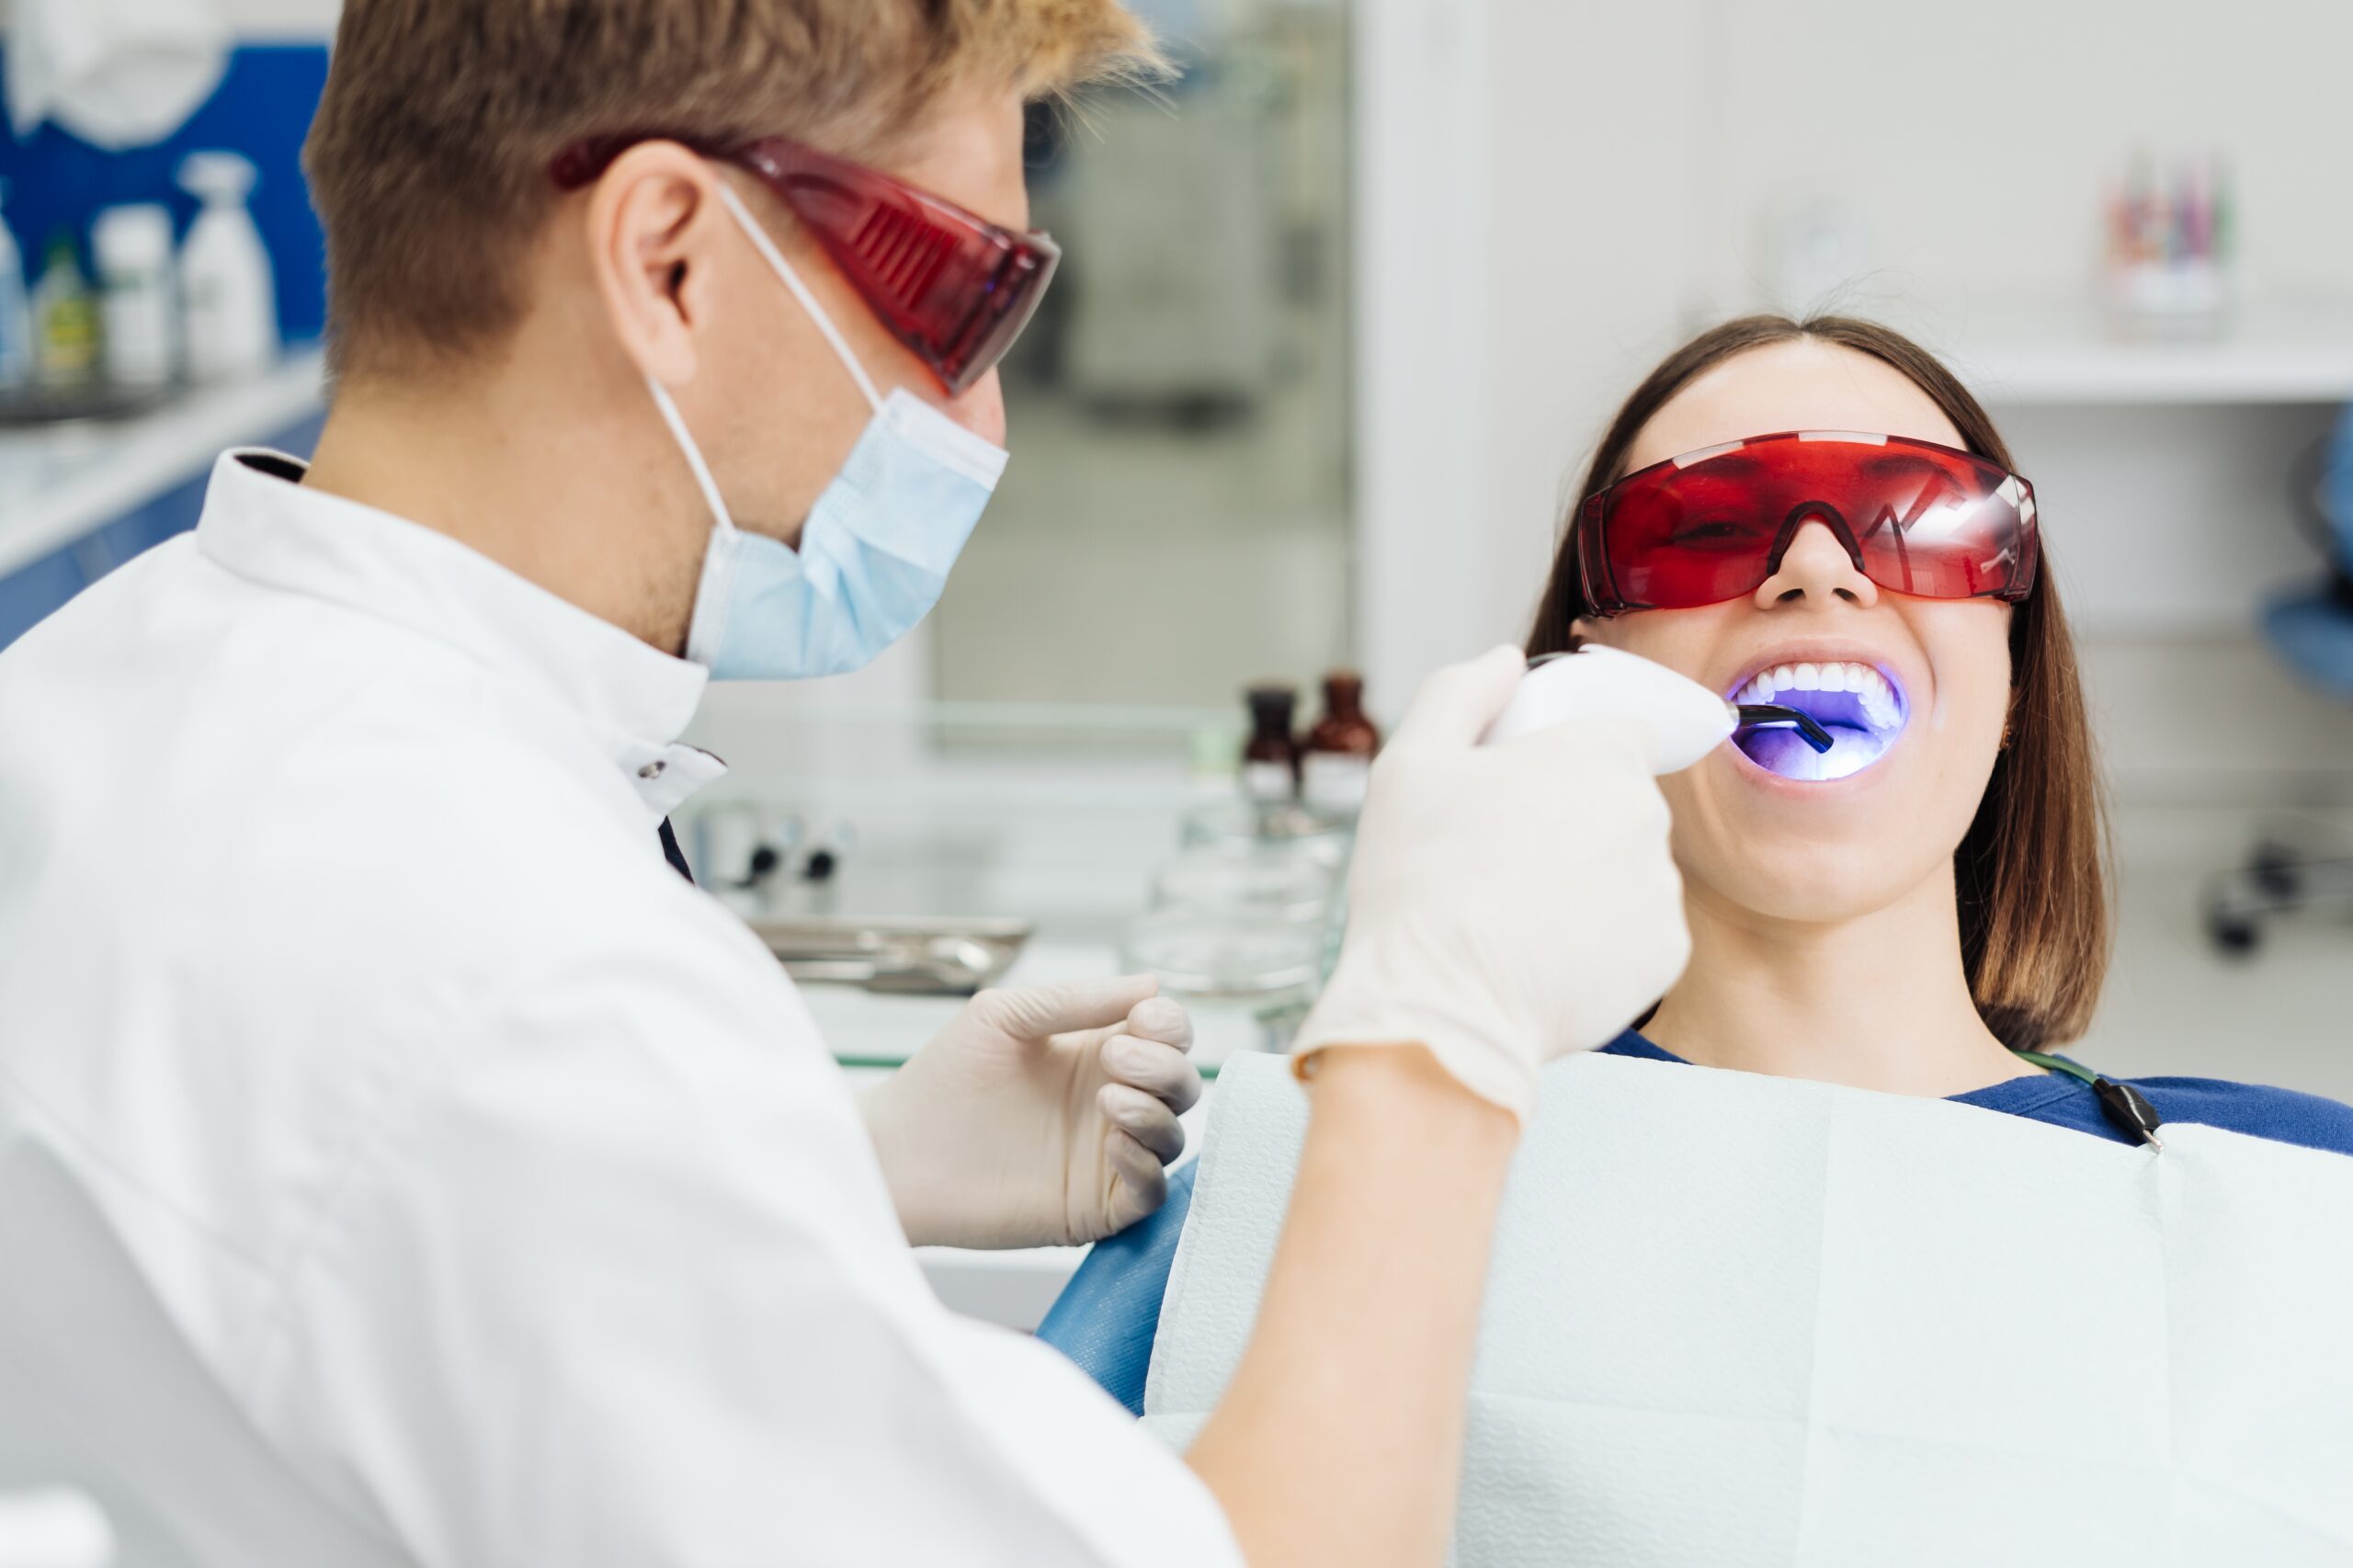 Professional Teeth Whitening vs. Home Kits – What’s The Verdict?